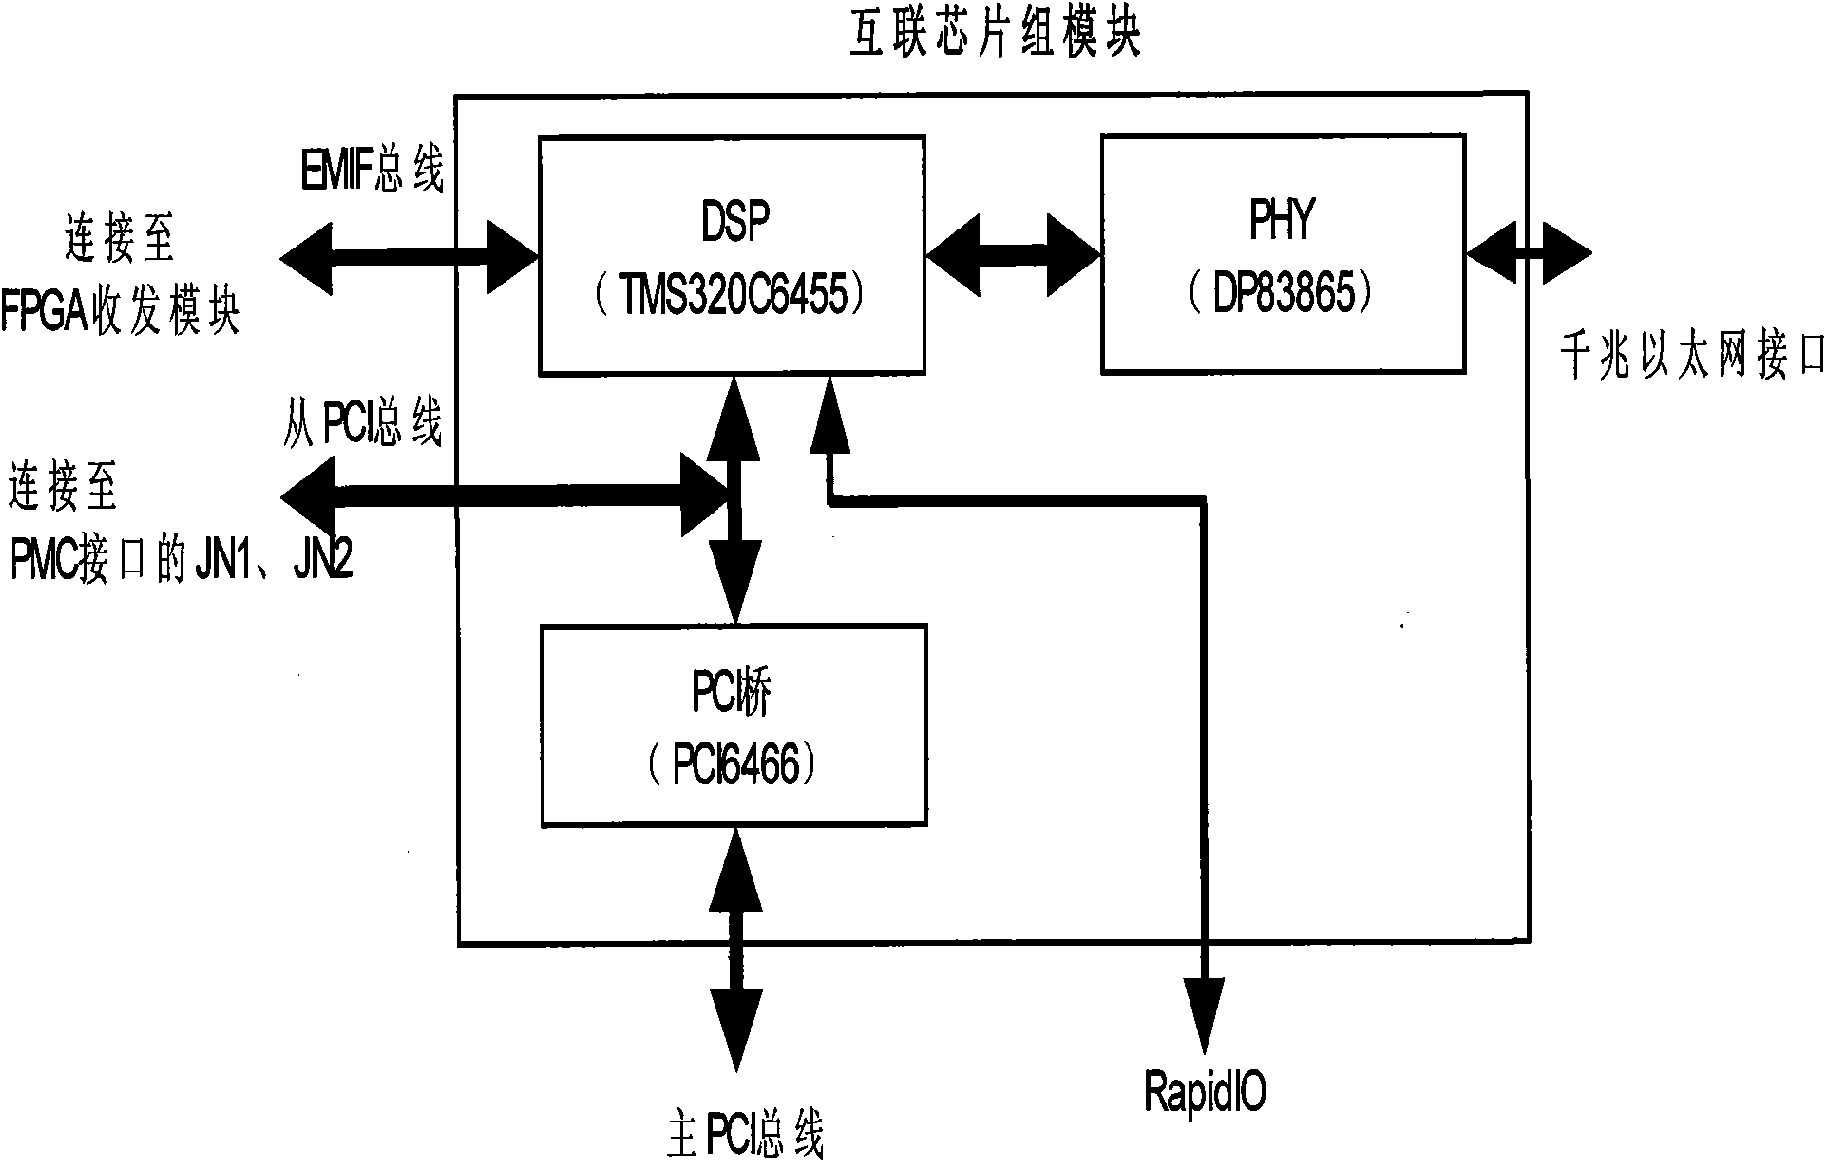 FPGA array processing board